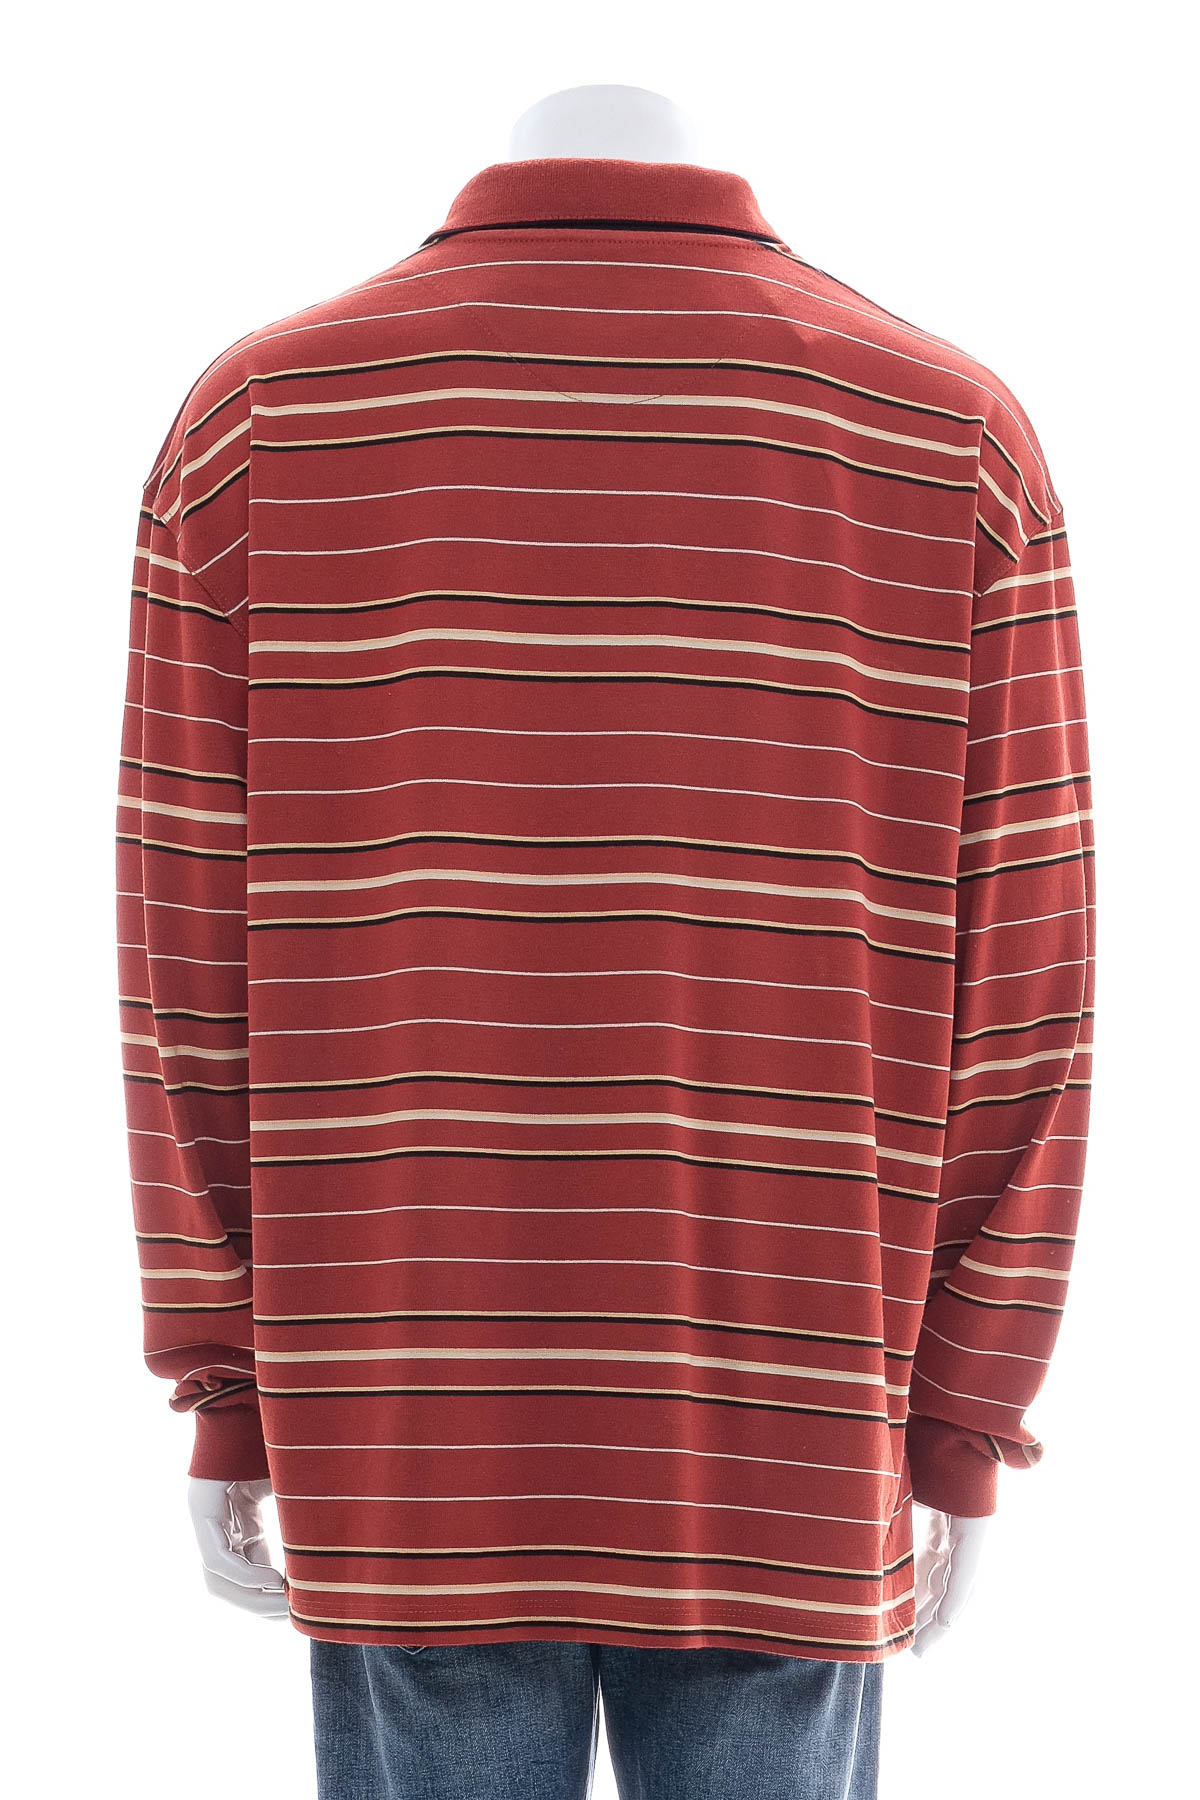 Men's sweater - Reymo - 1